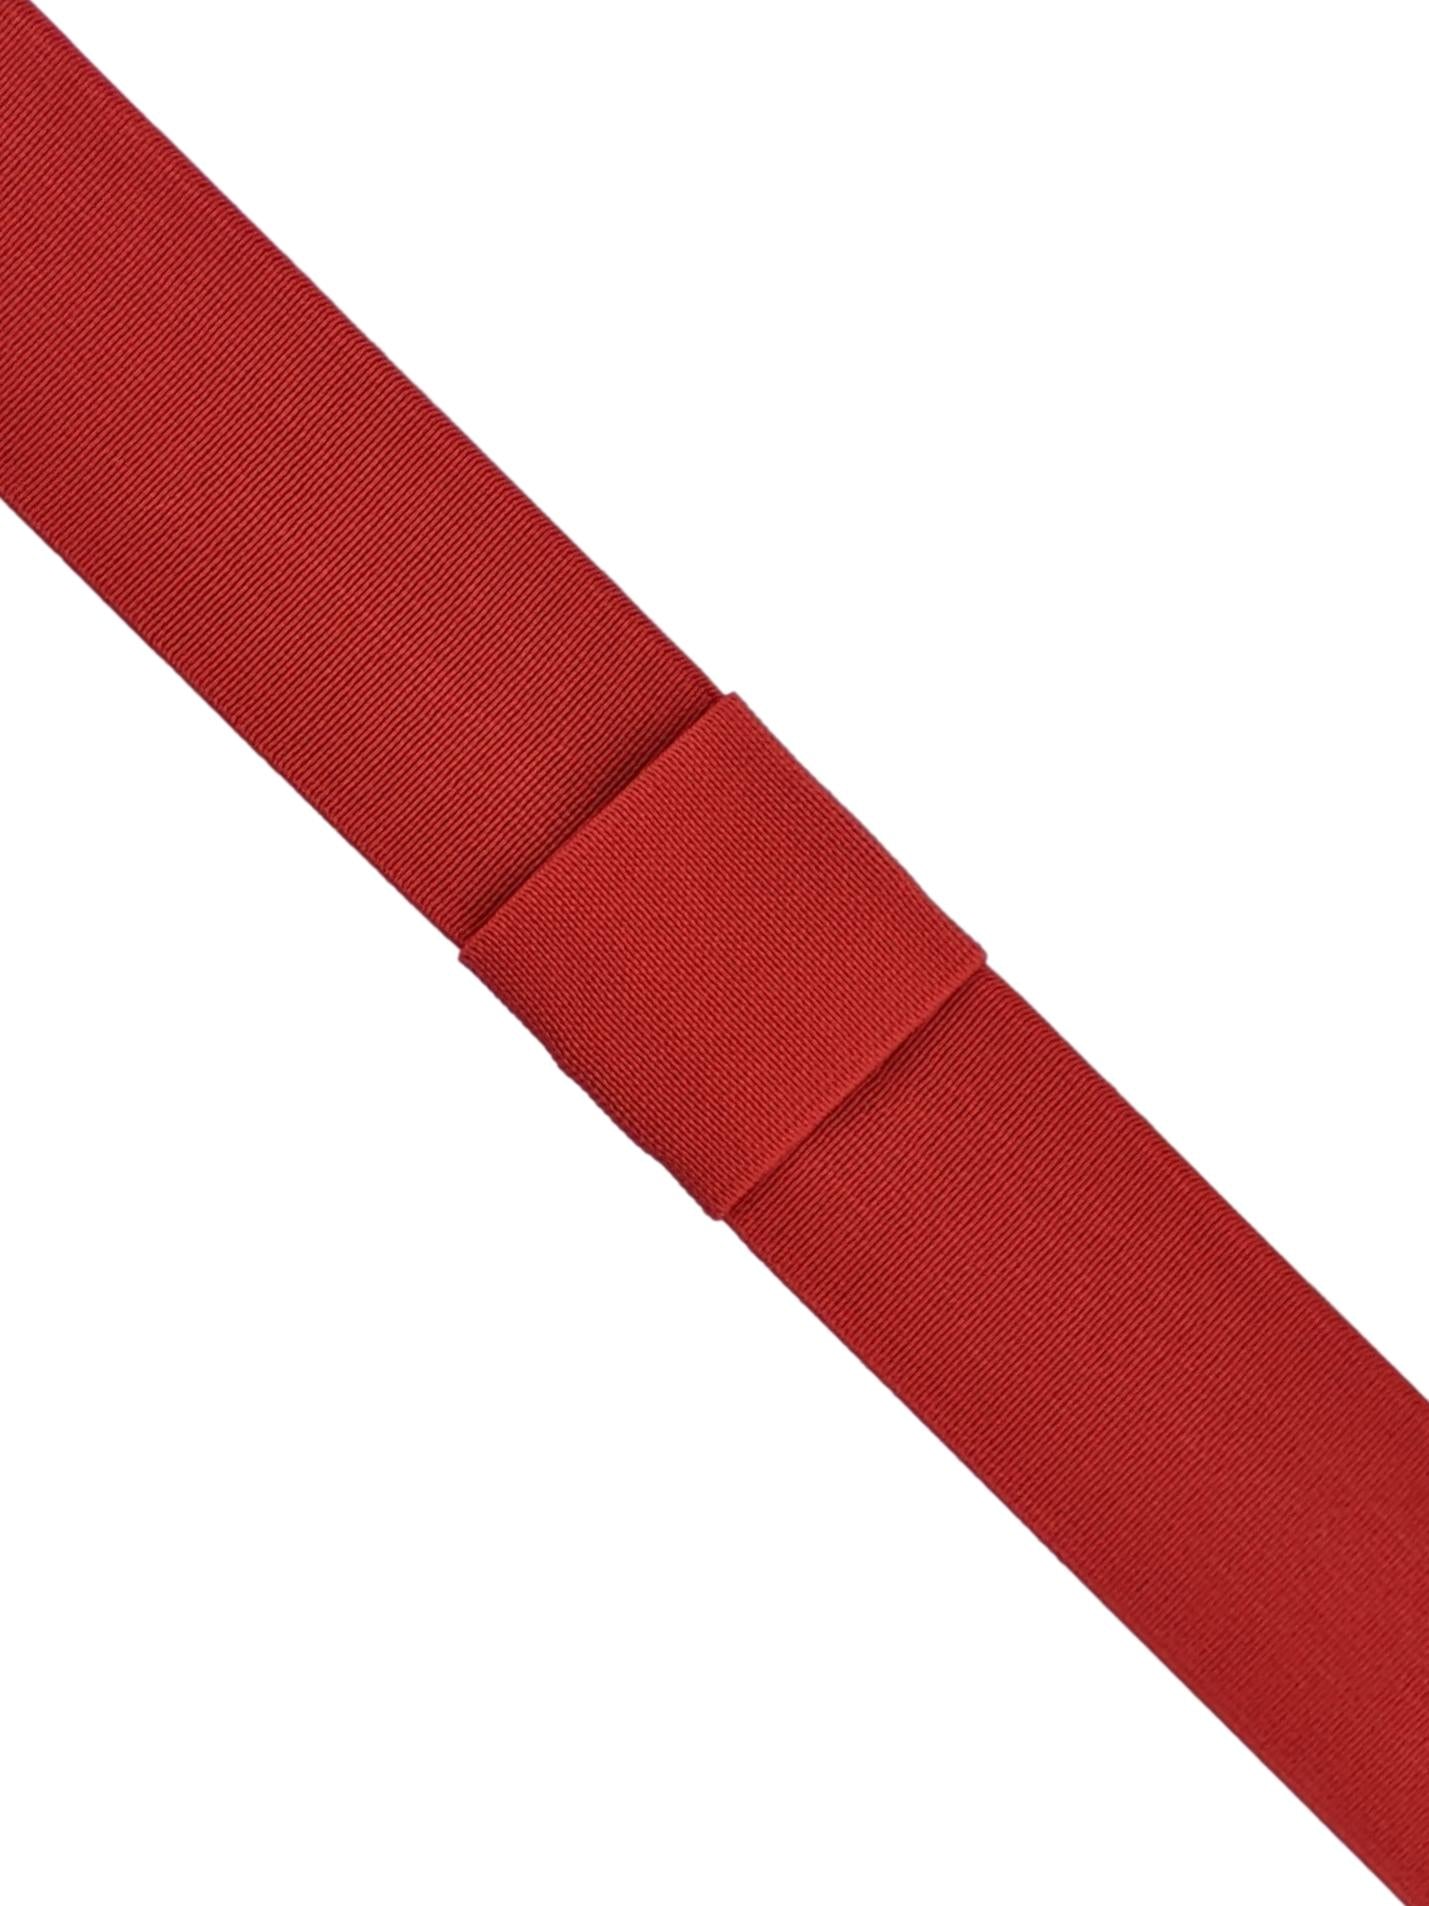 Interchangeable Panama Band - Red